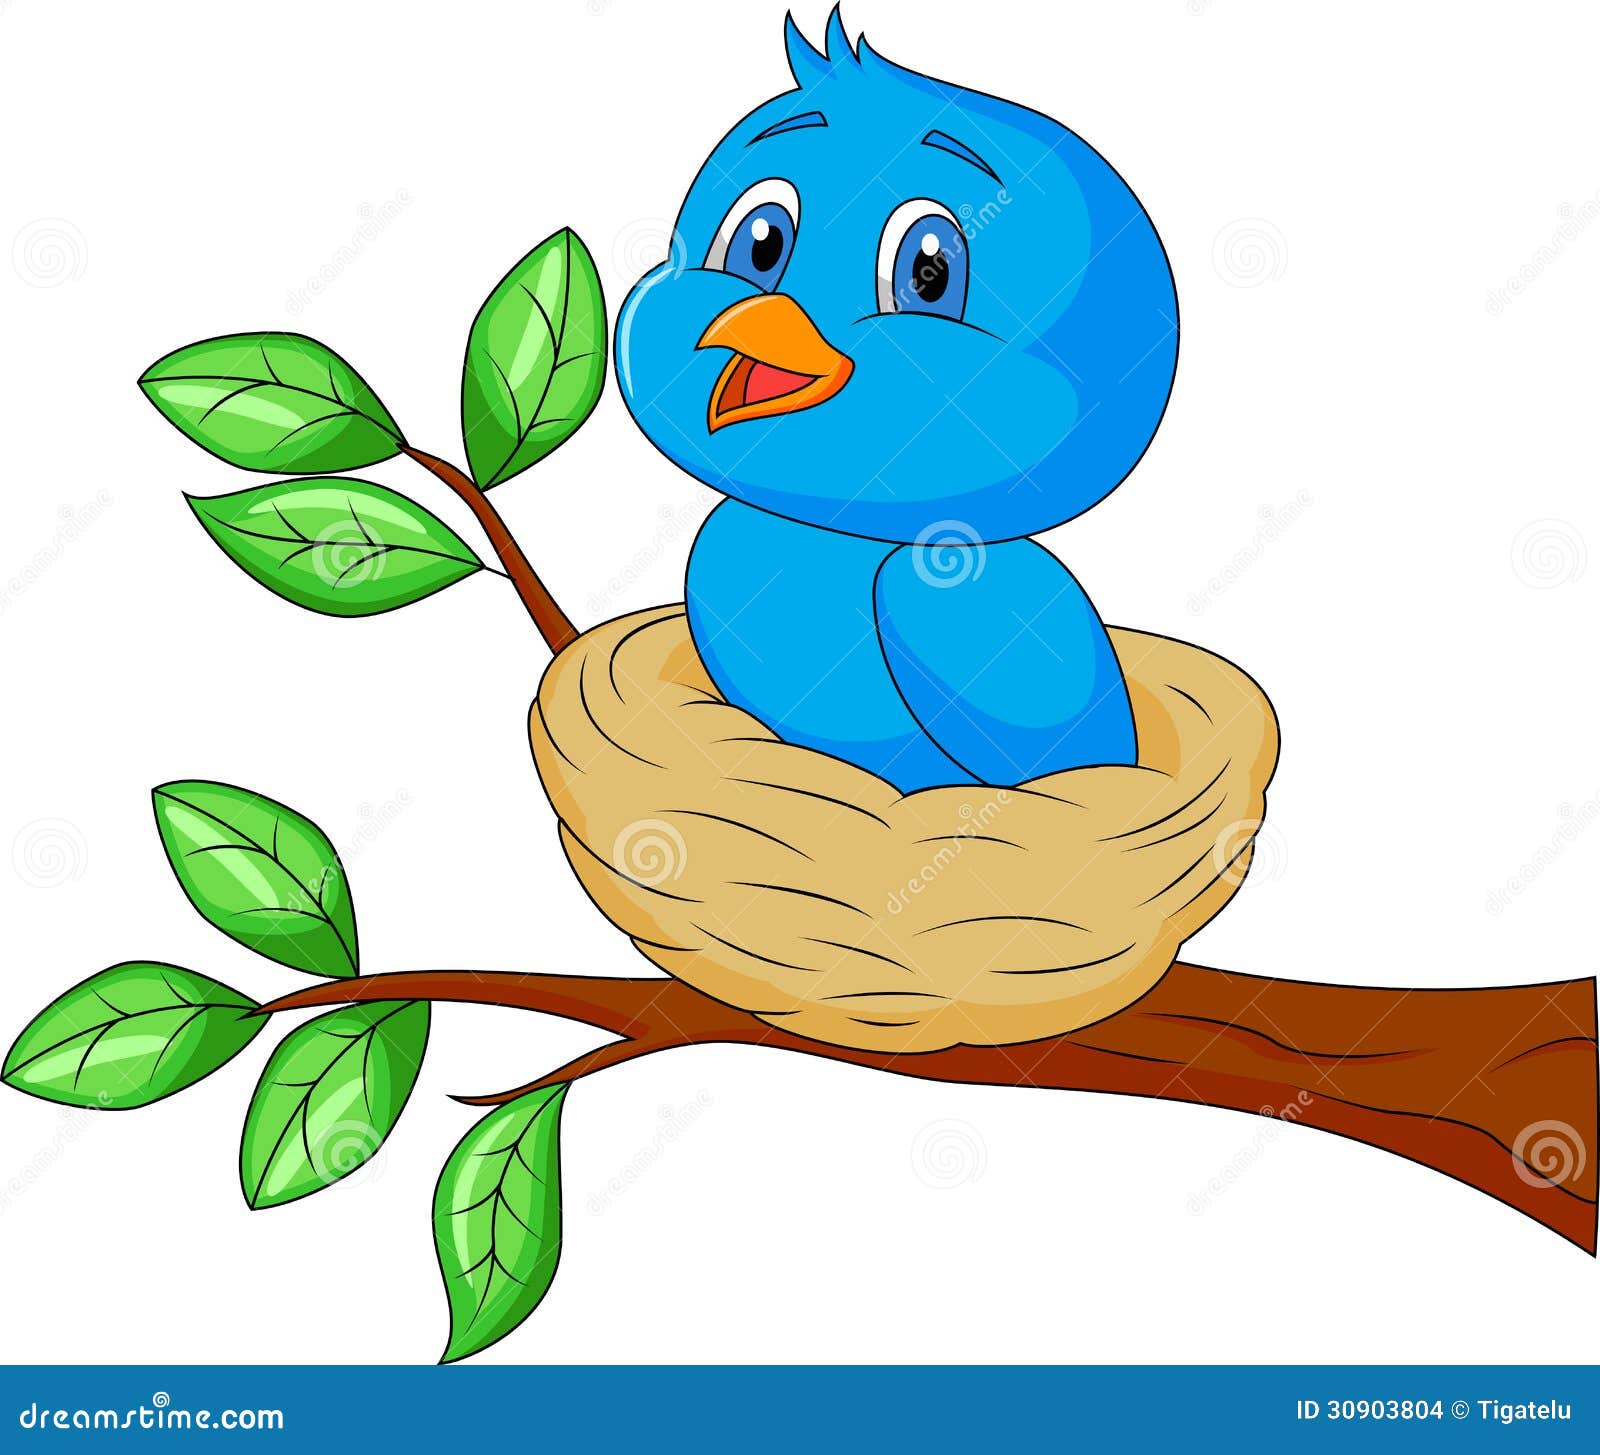 blue bird cartoon in the nest